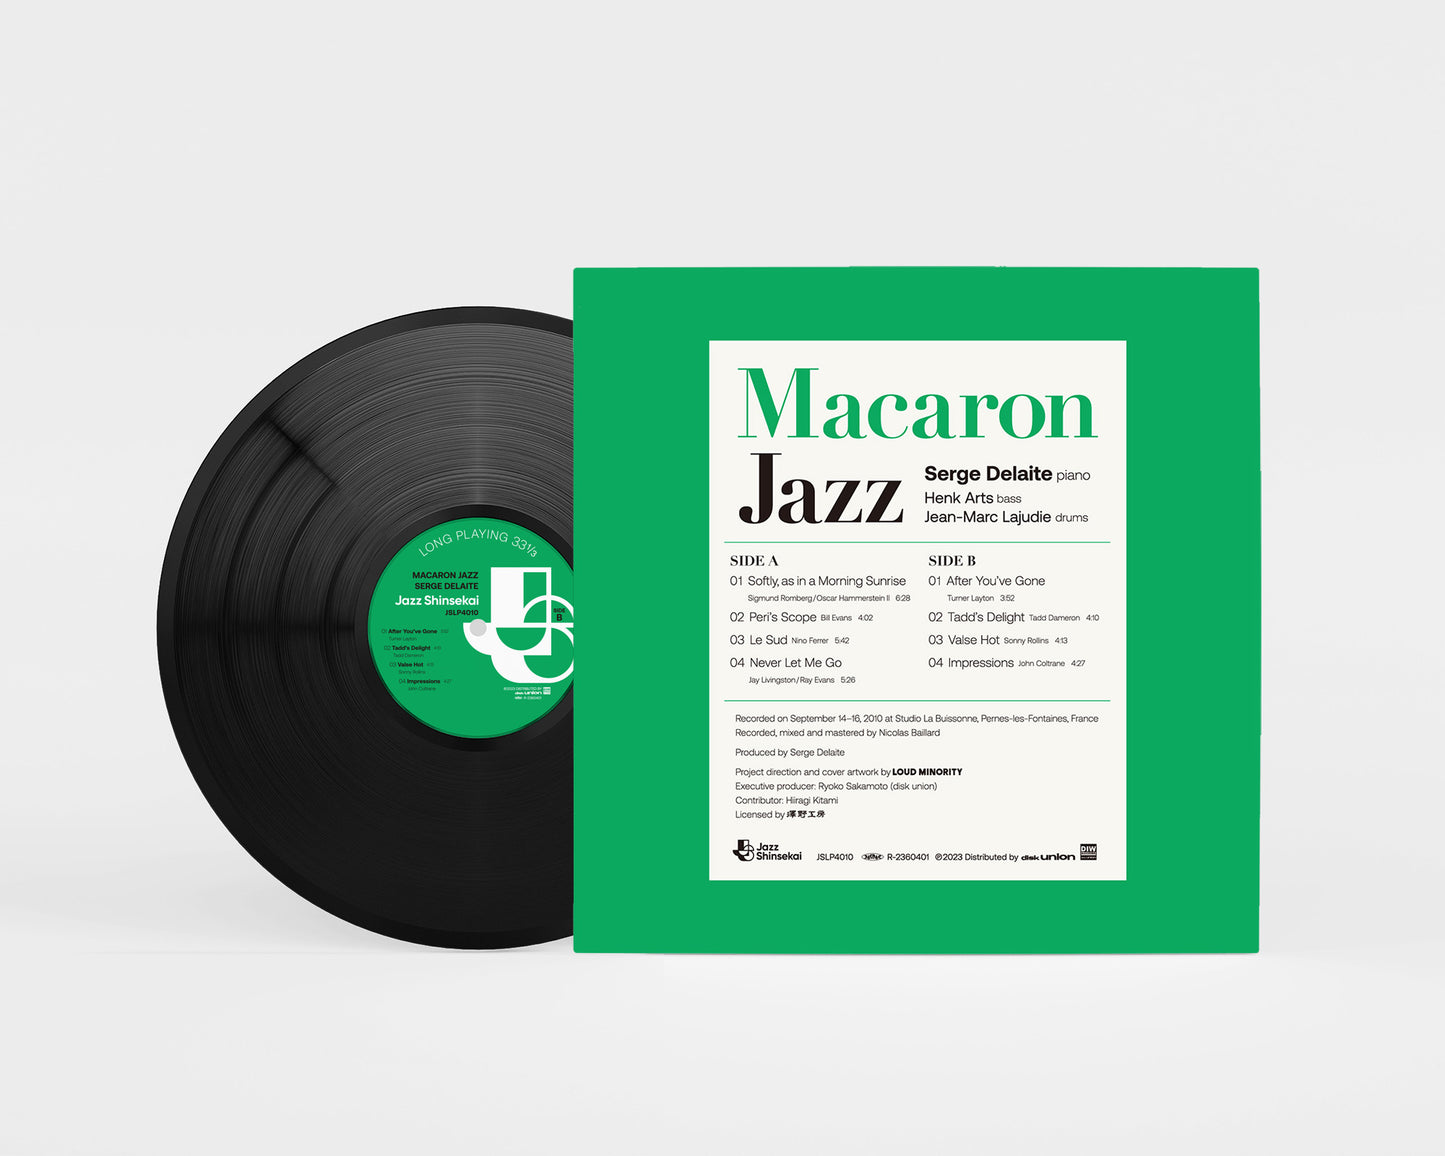 MACARON JAZZ (LP) - SERGE DELAITE TRIO